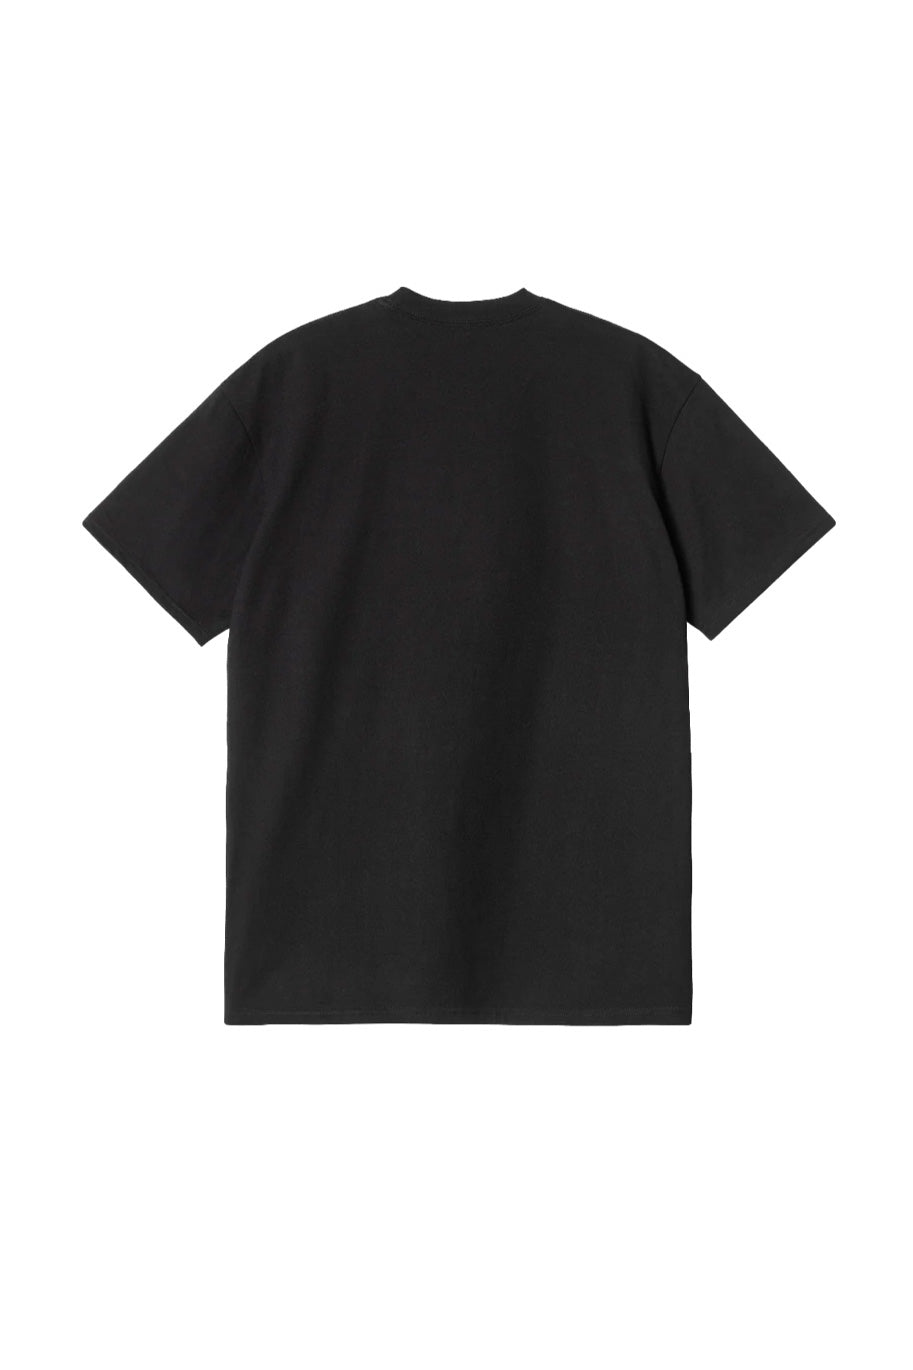 Carhartt S/S Heart Pocket t-shirt - black